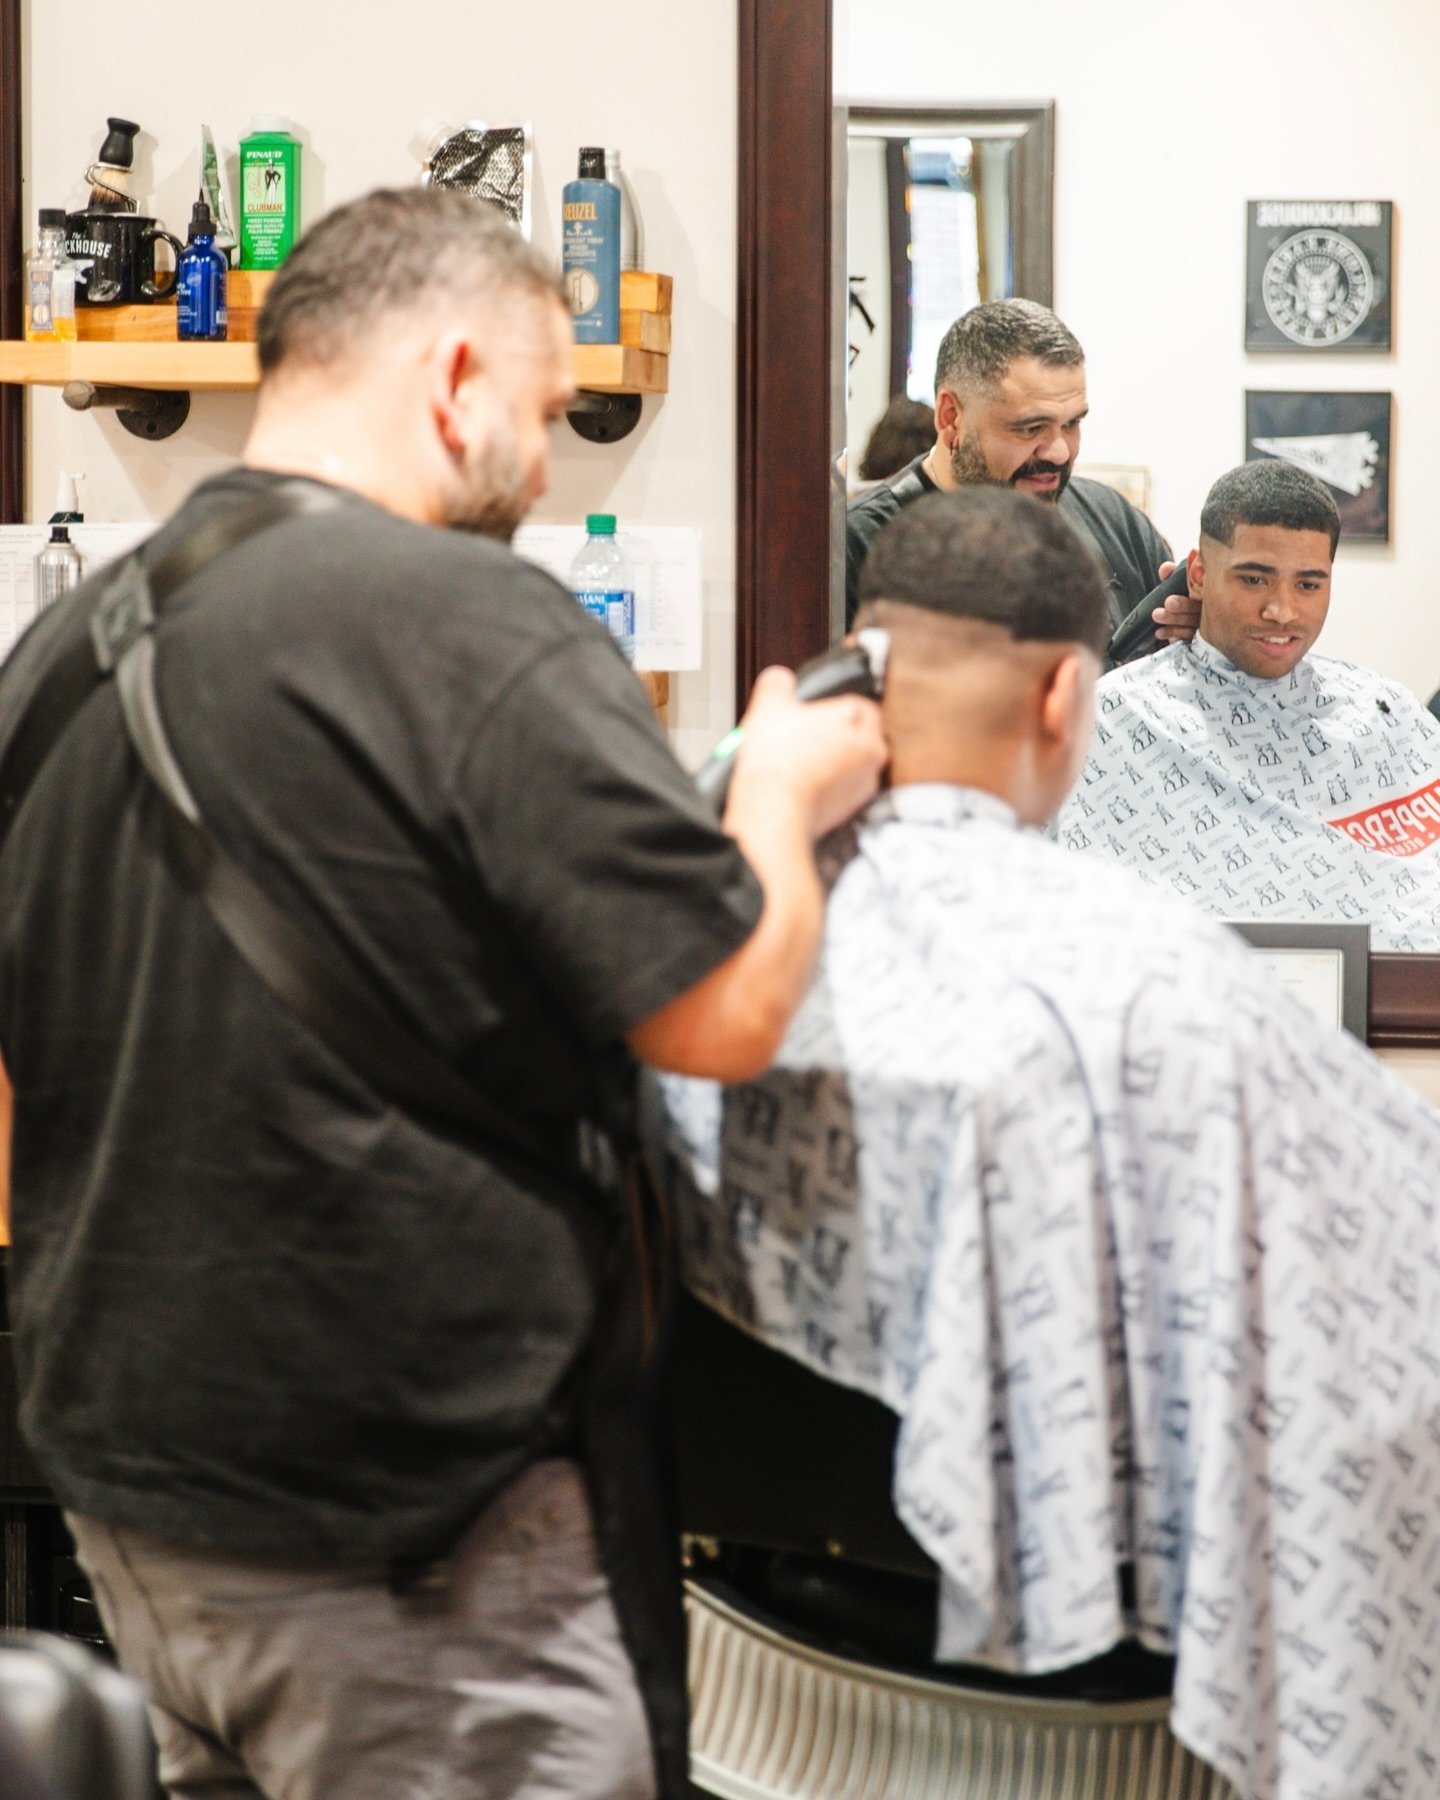 💈You&rsquo;re gonna kill it today! 💪 #workhardstayhumble 
-
-
-
#theblockhousefranklin #barbershop #tnbarber #nashvillebarber #franklinfactory #workhard #franklintn #haircut #menshair #barber #barberlife #barberlove #barberworld #barbernation #barb